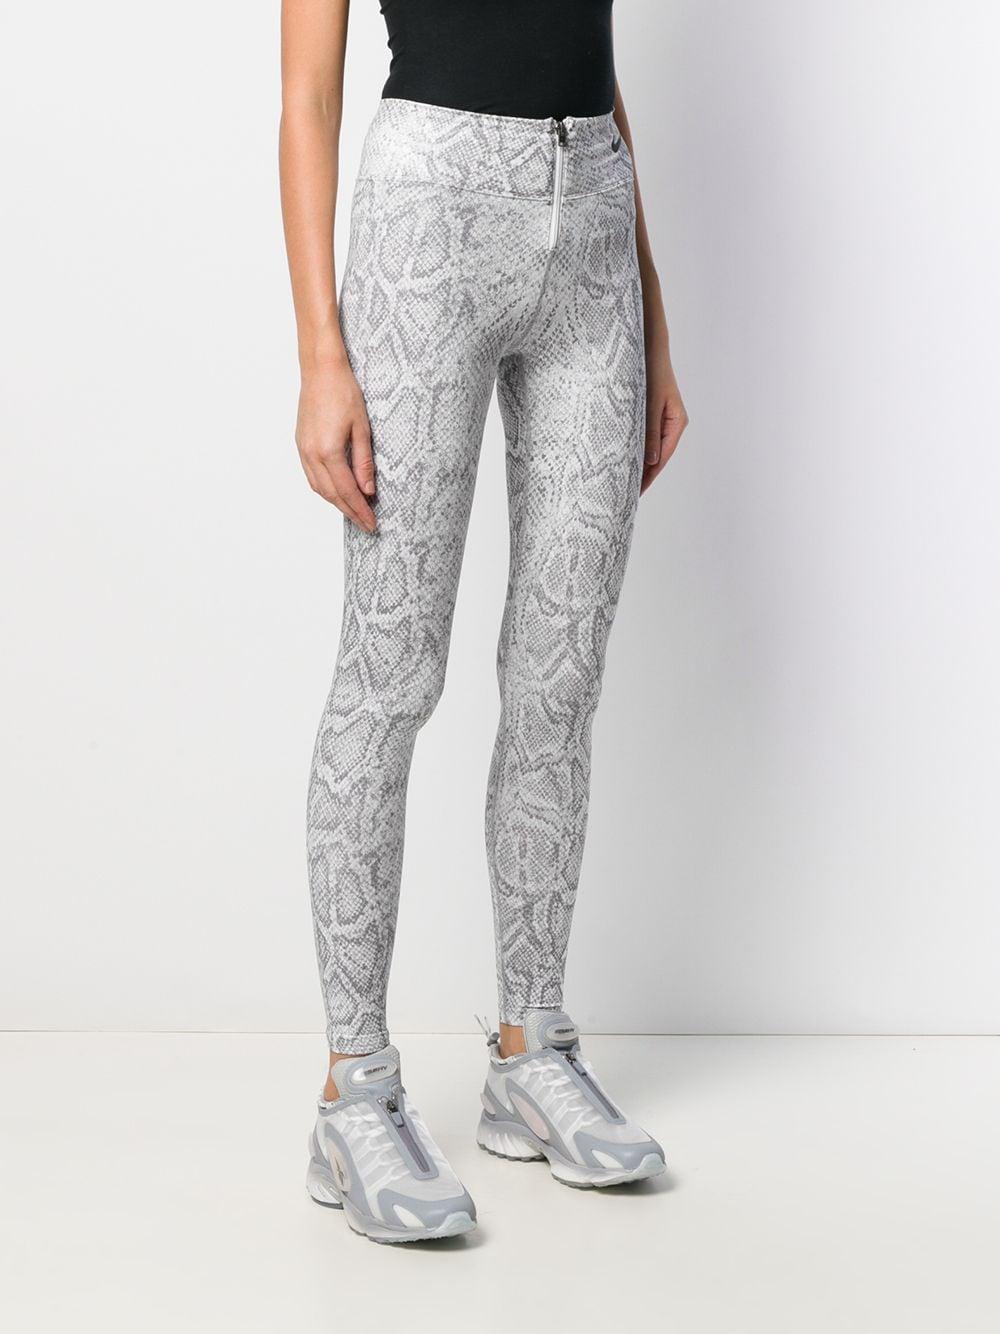 Nike Synthetic Snake-effect Print Zip leggings in Grey (Gray) | Lyst